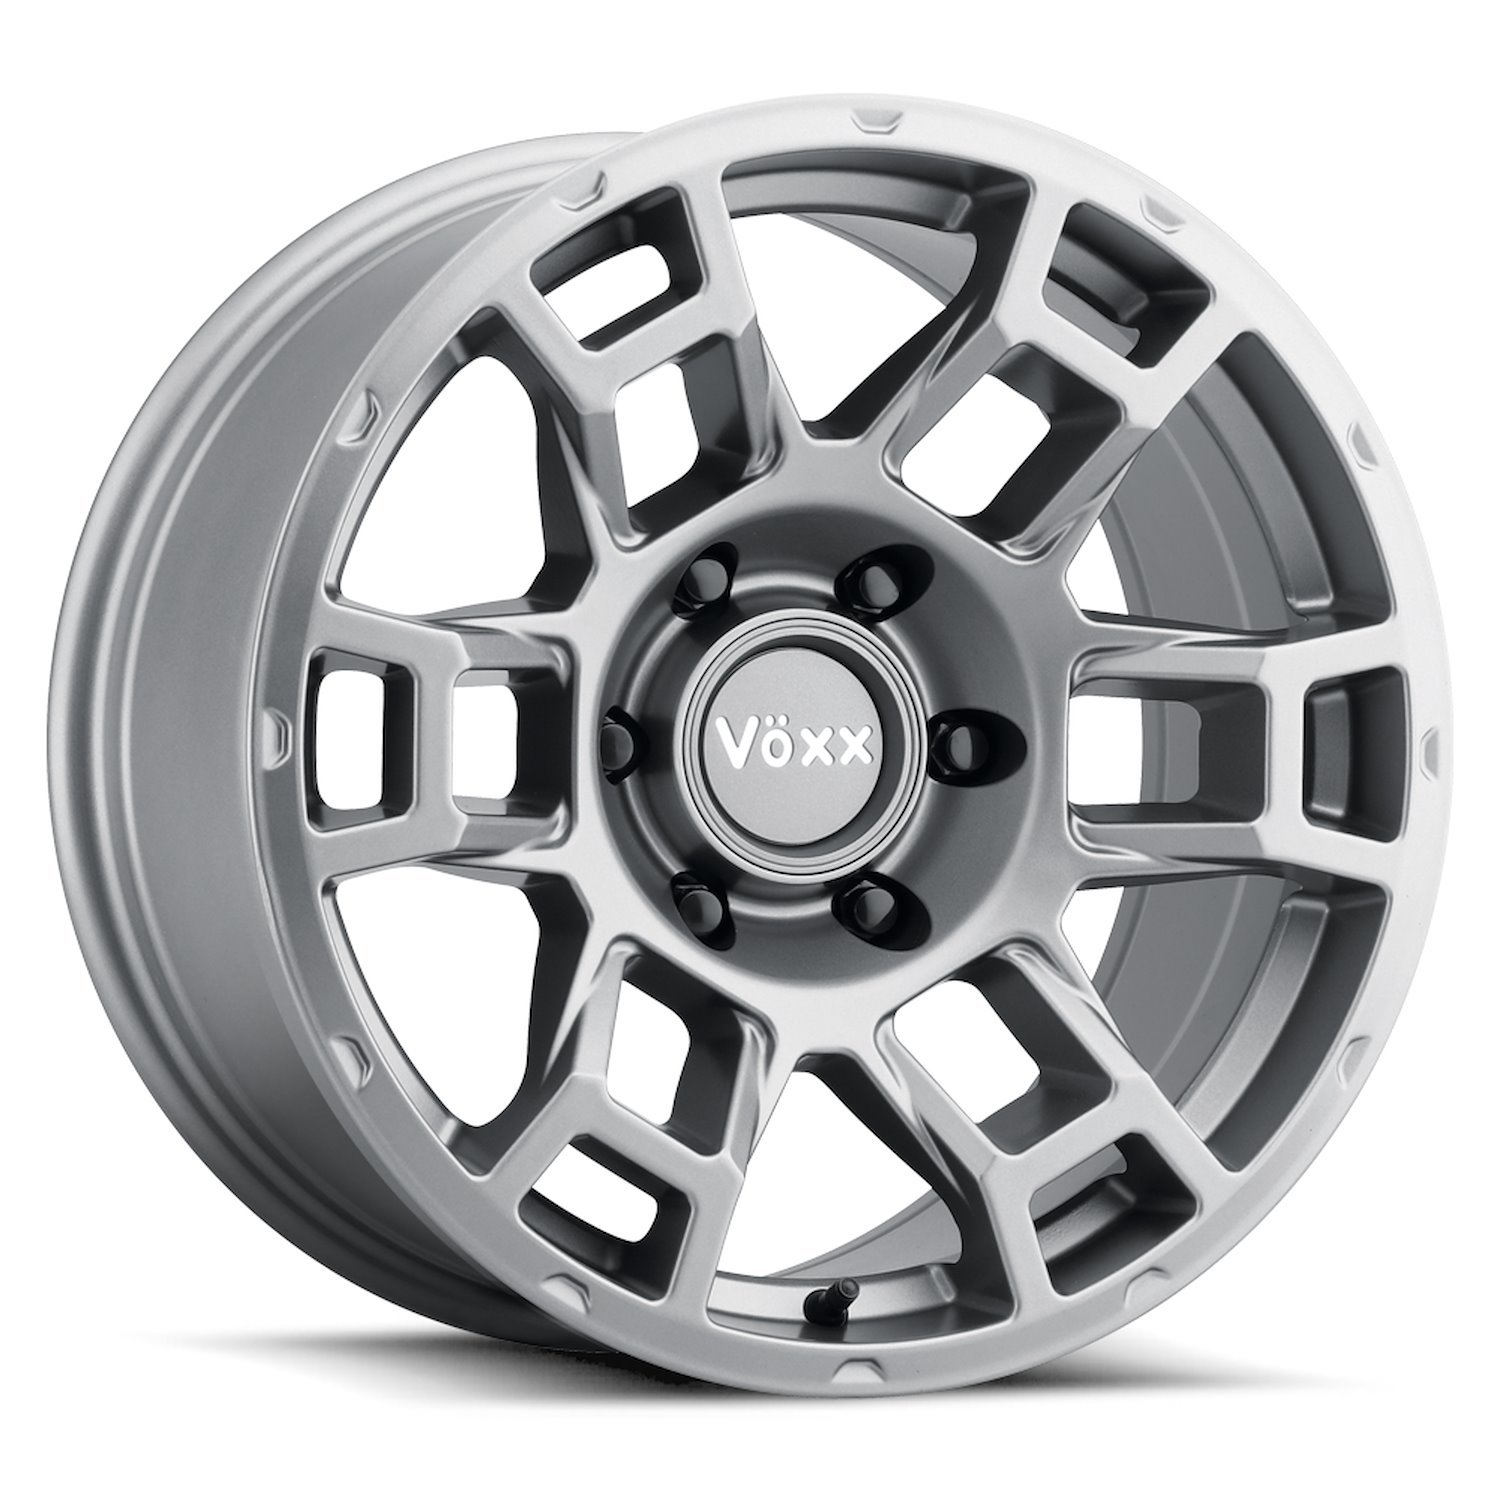 Replica PRO 785-6139-00 GRY Pro Wheel [Size: 17" x 8.50"] Finish: Dark Matte Grey